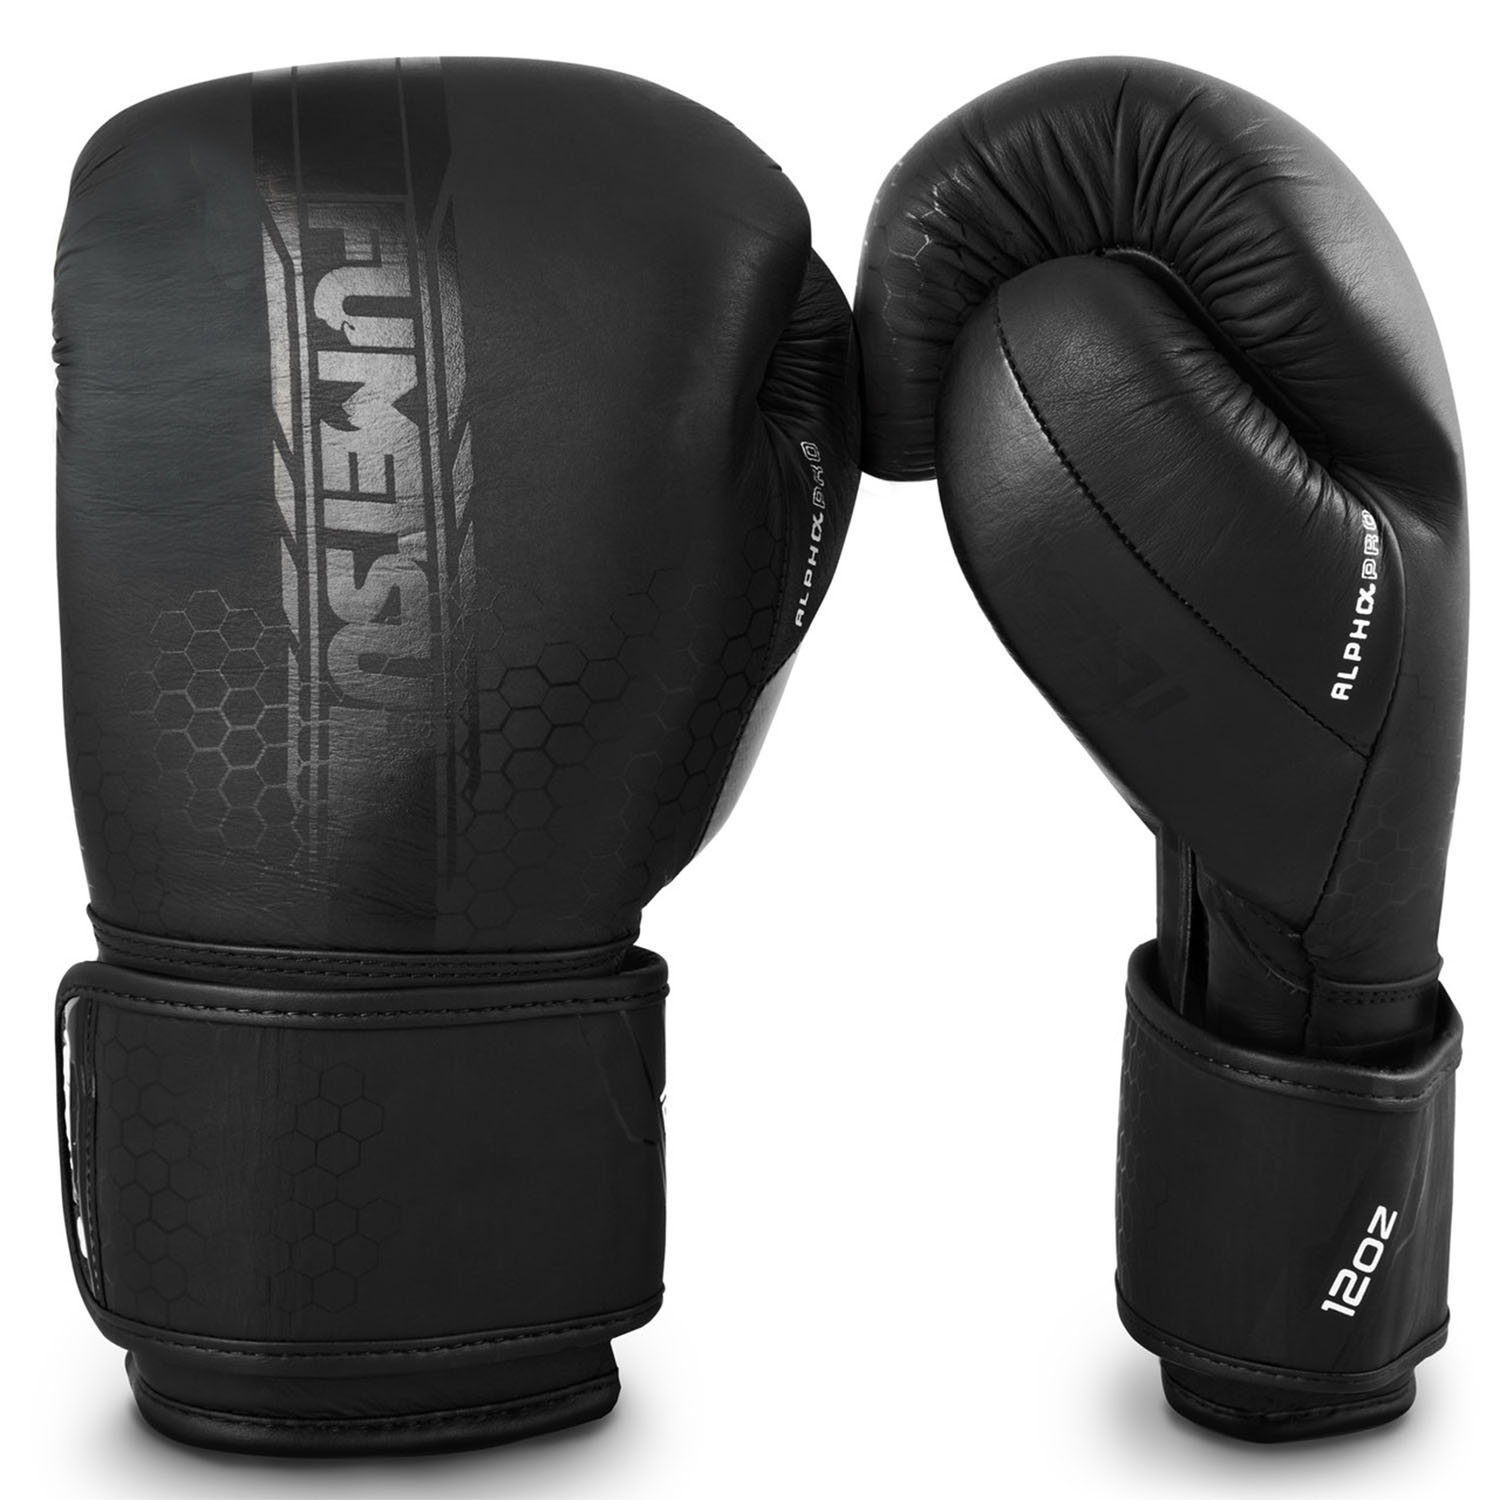 Fumetsu Boxing Gloves, Alpha Pro, black-gold